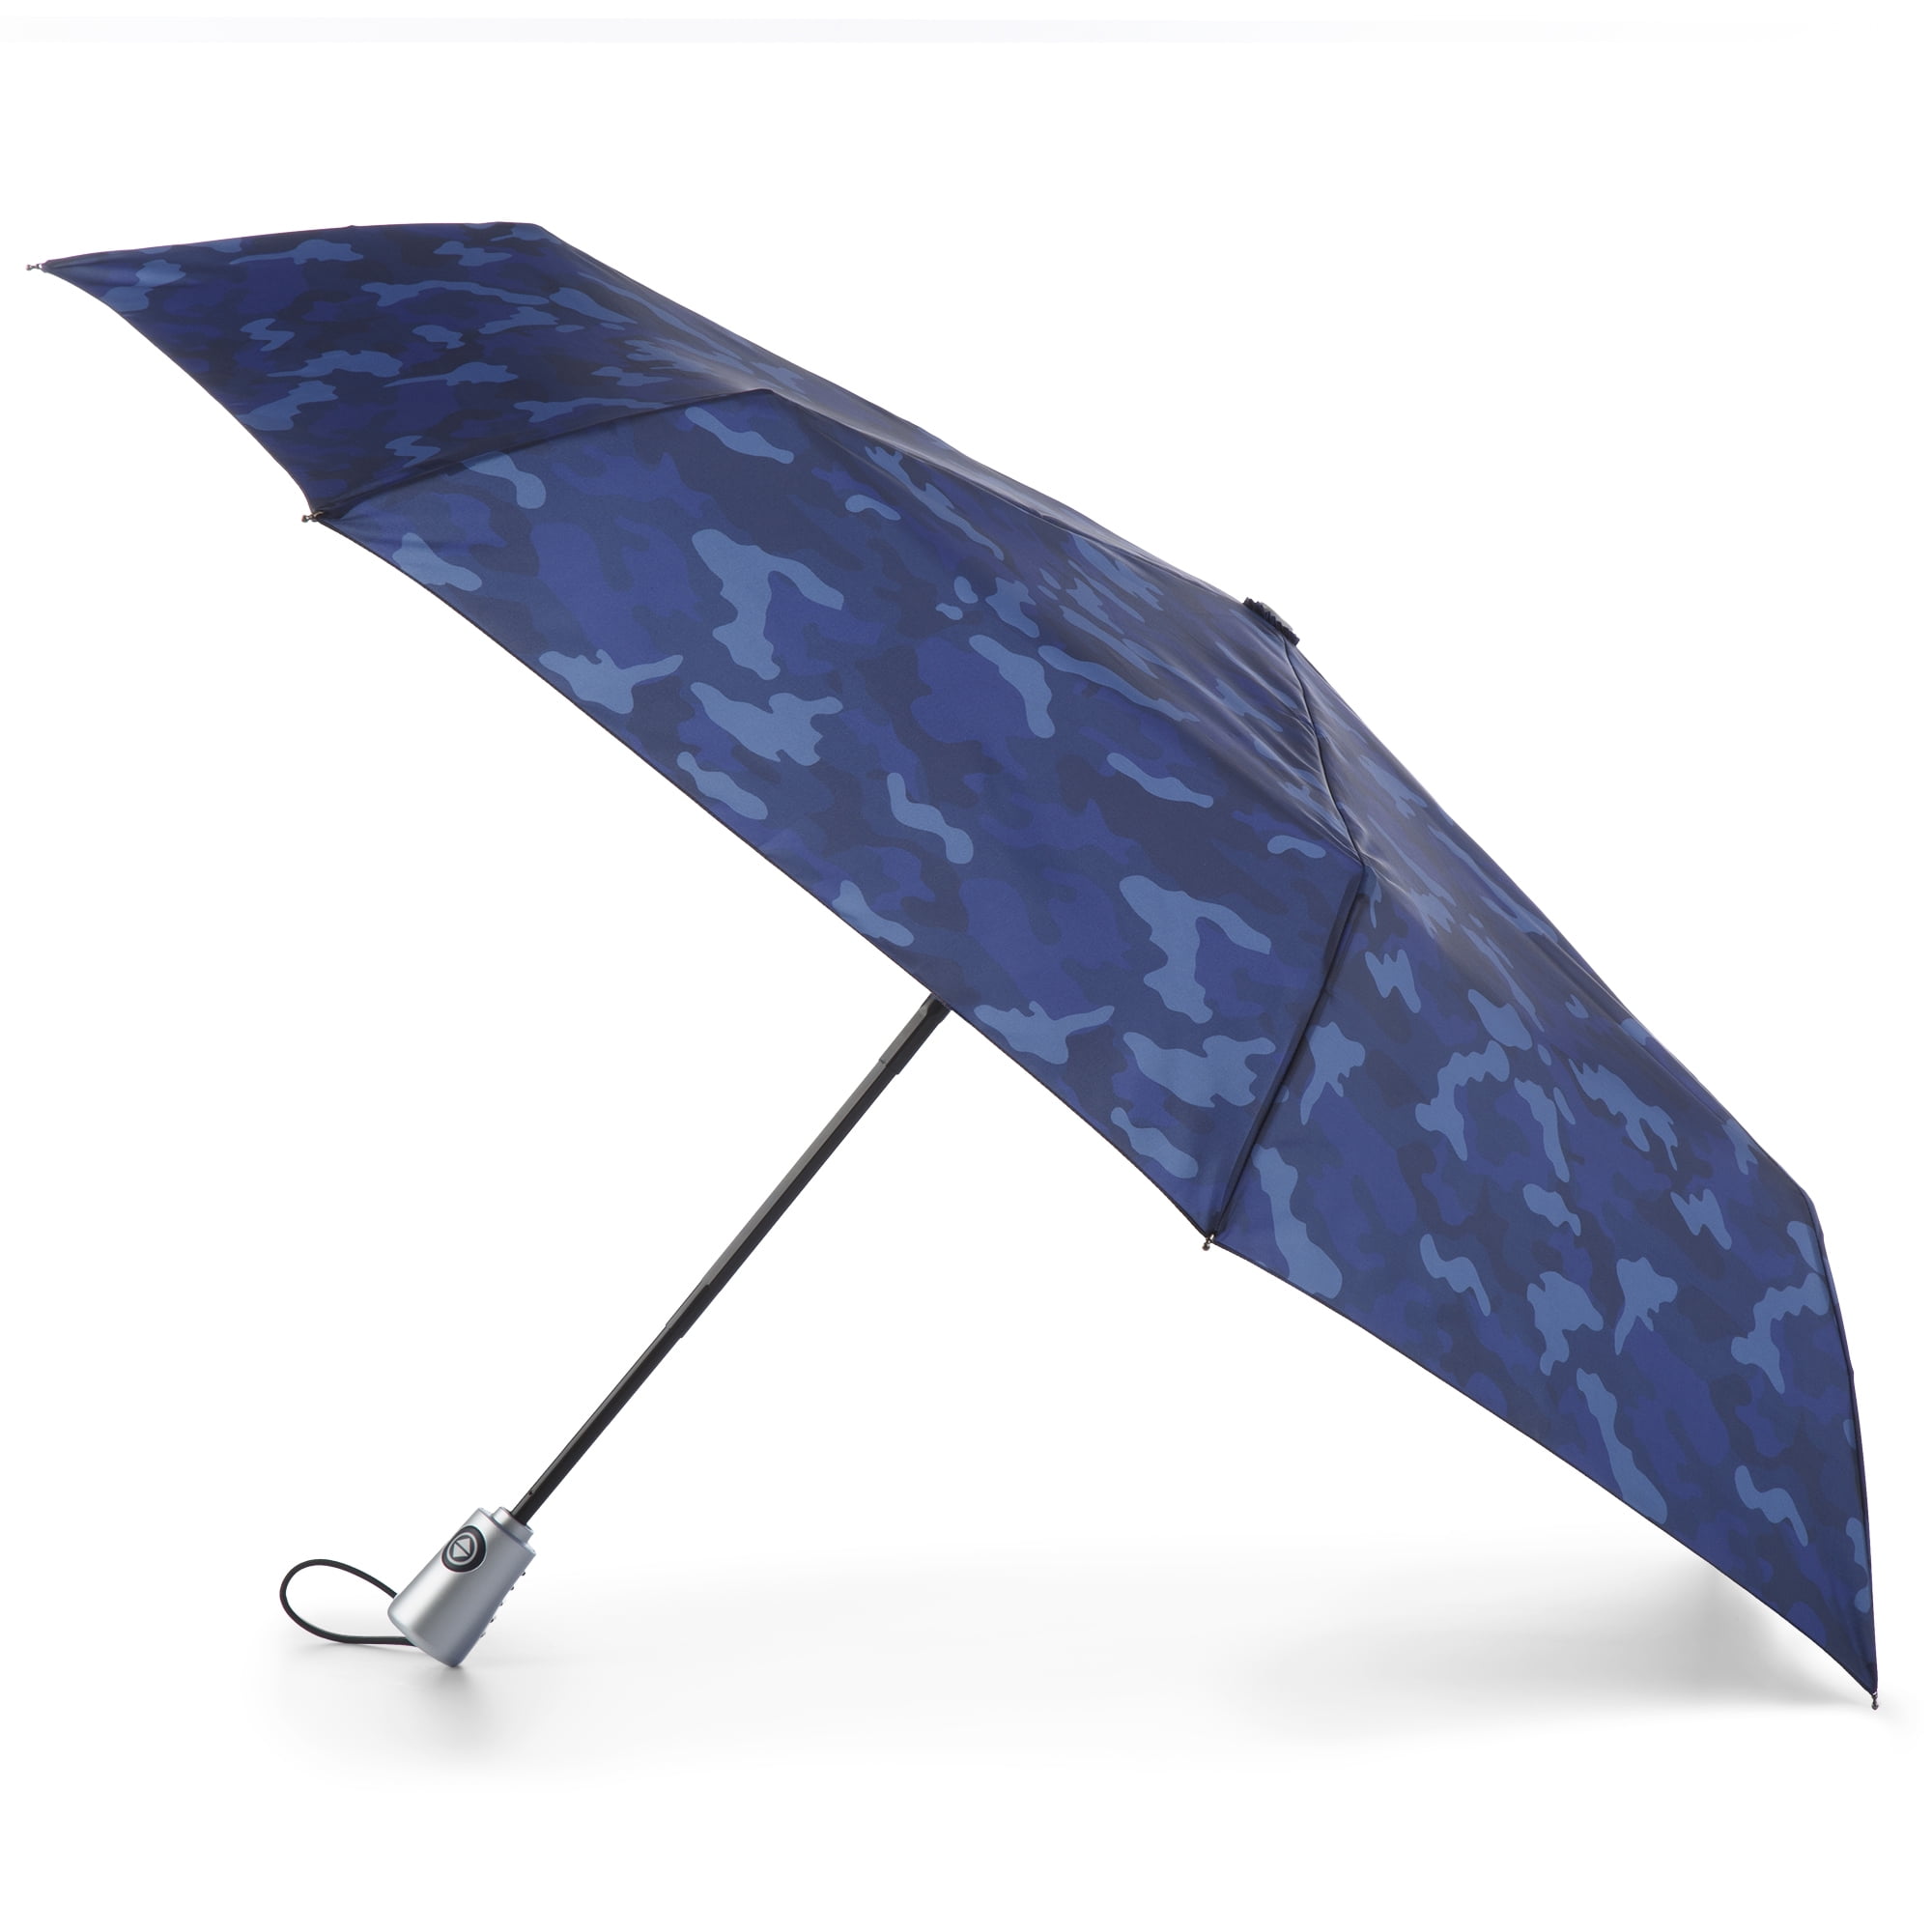 totes One-touch Auto Open Close Umbrella with Sunguard